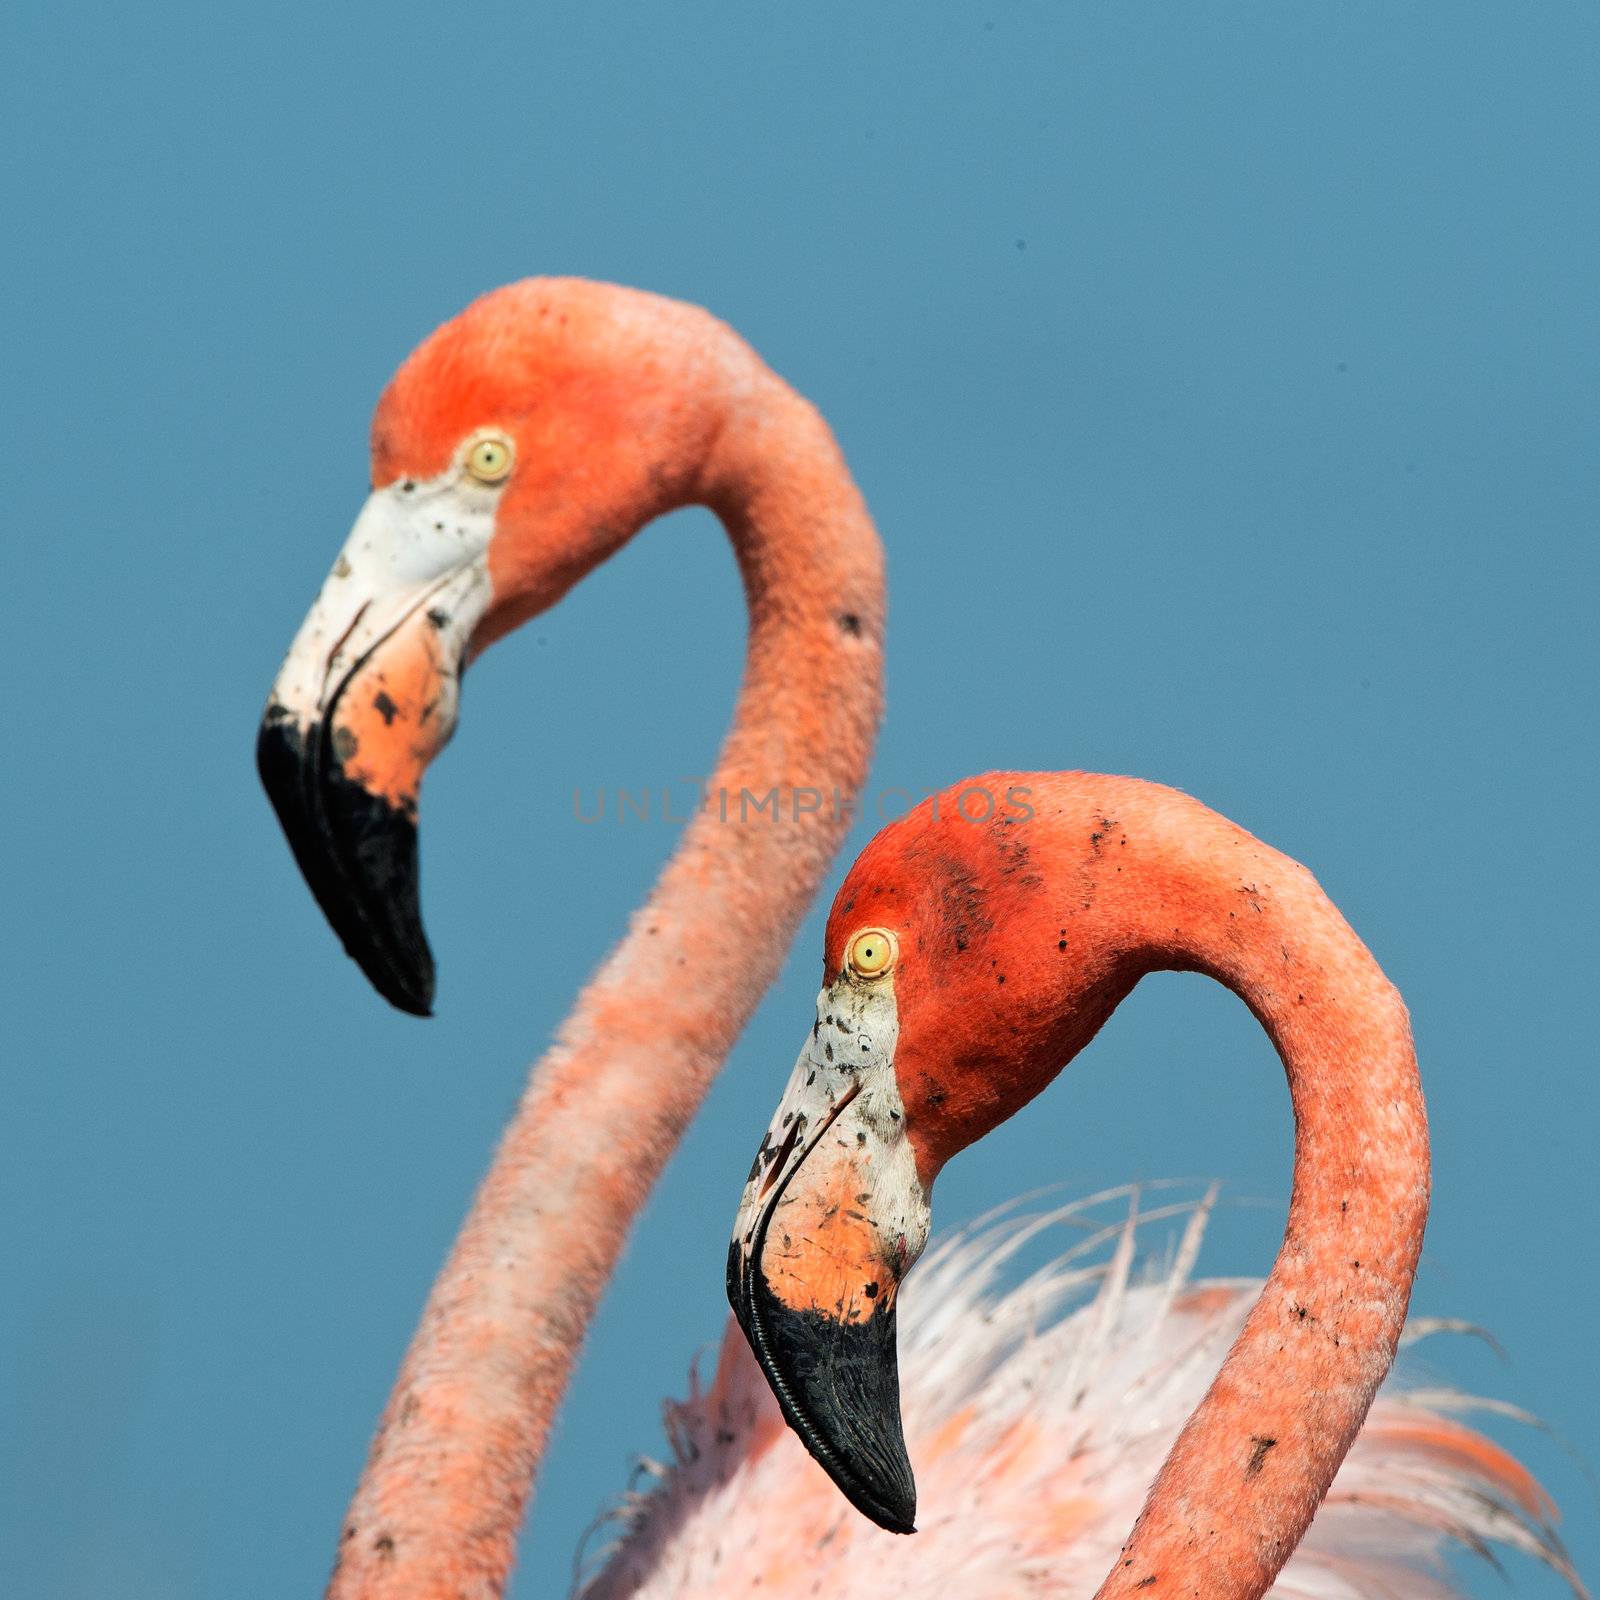 Flamingo (Phoenicopterus ruber) by SURZ